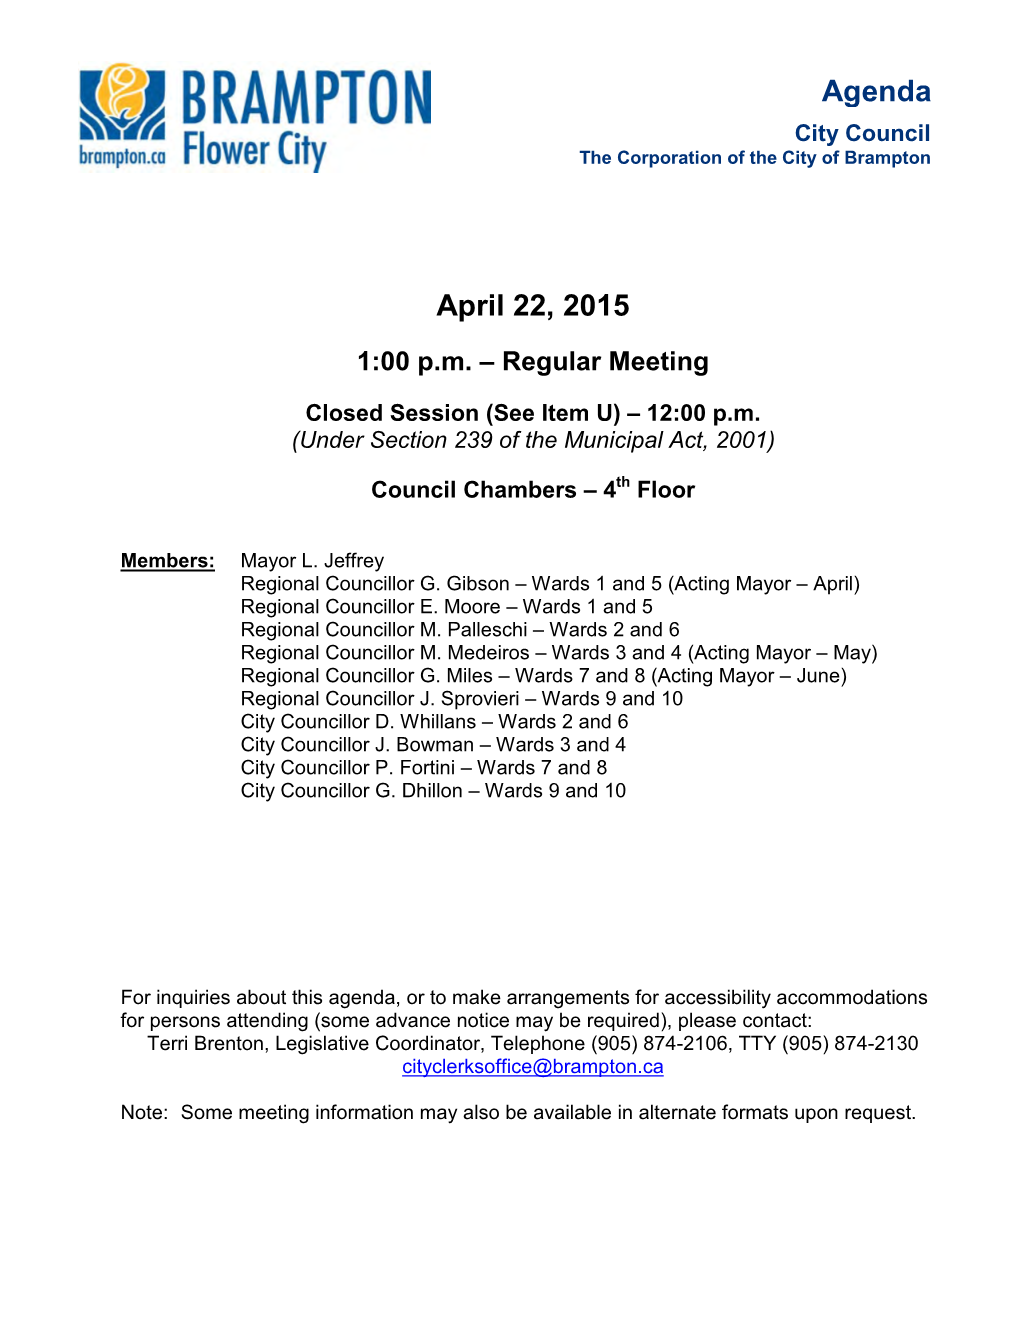 City Council Agenda for April 22, 2015